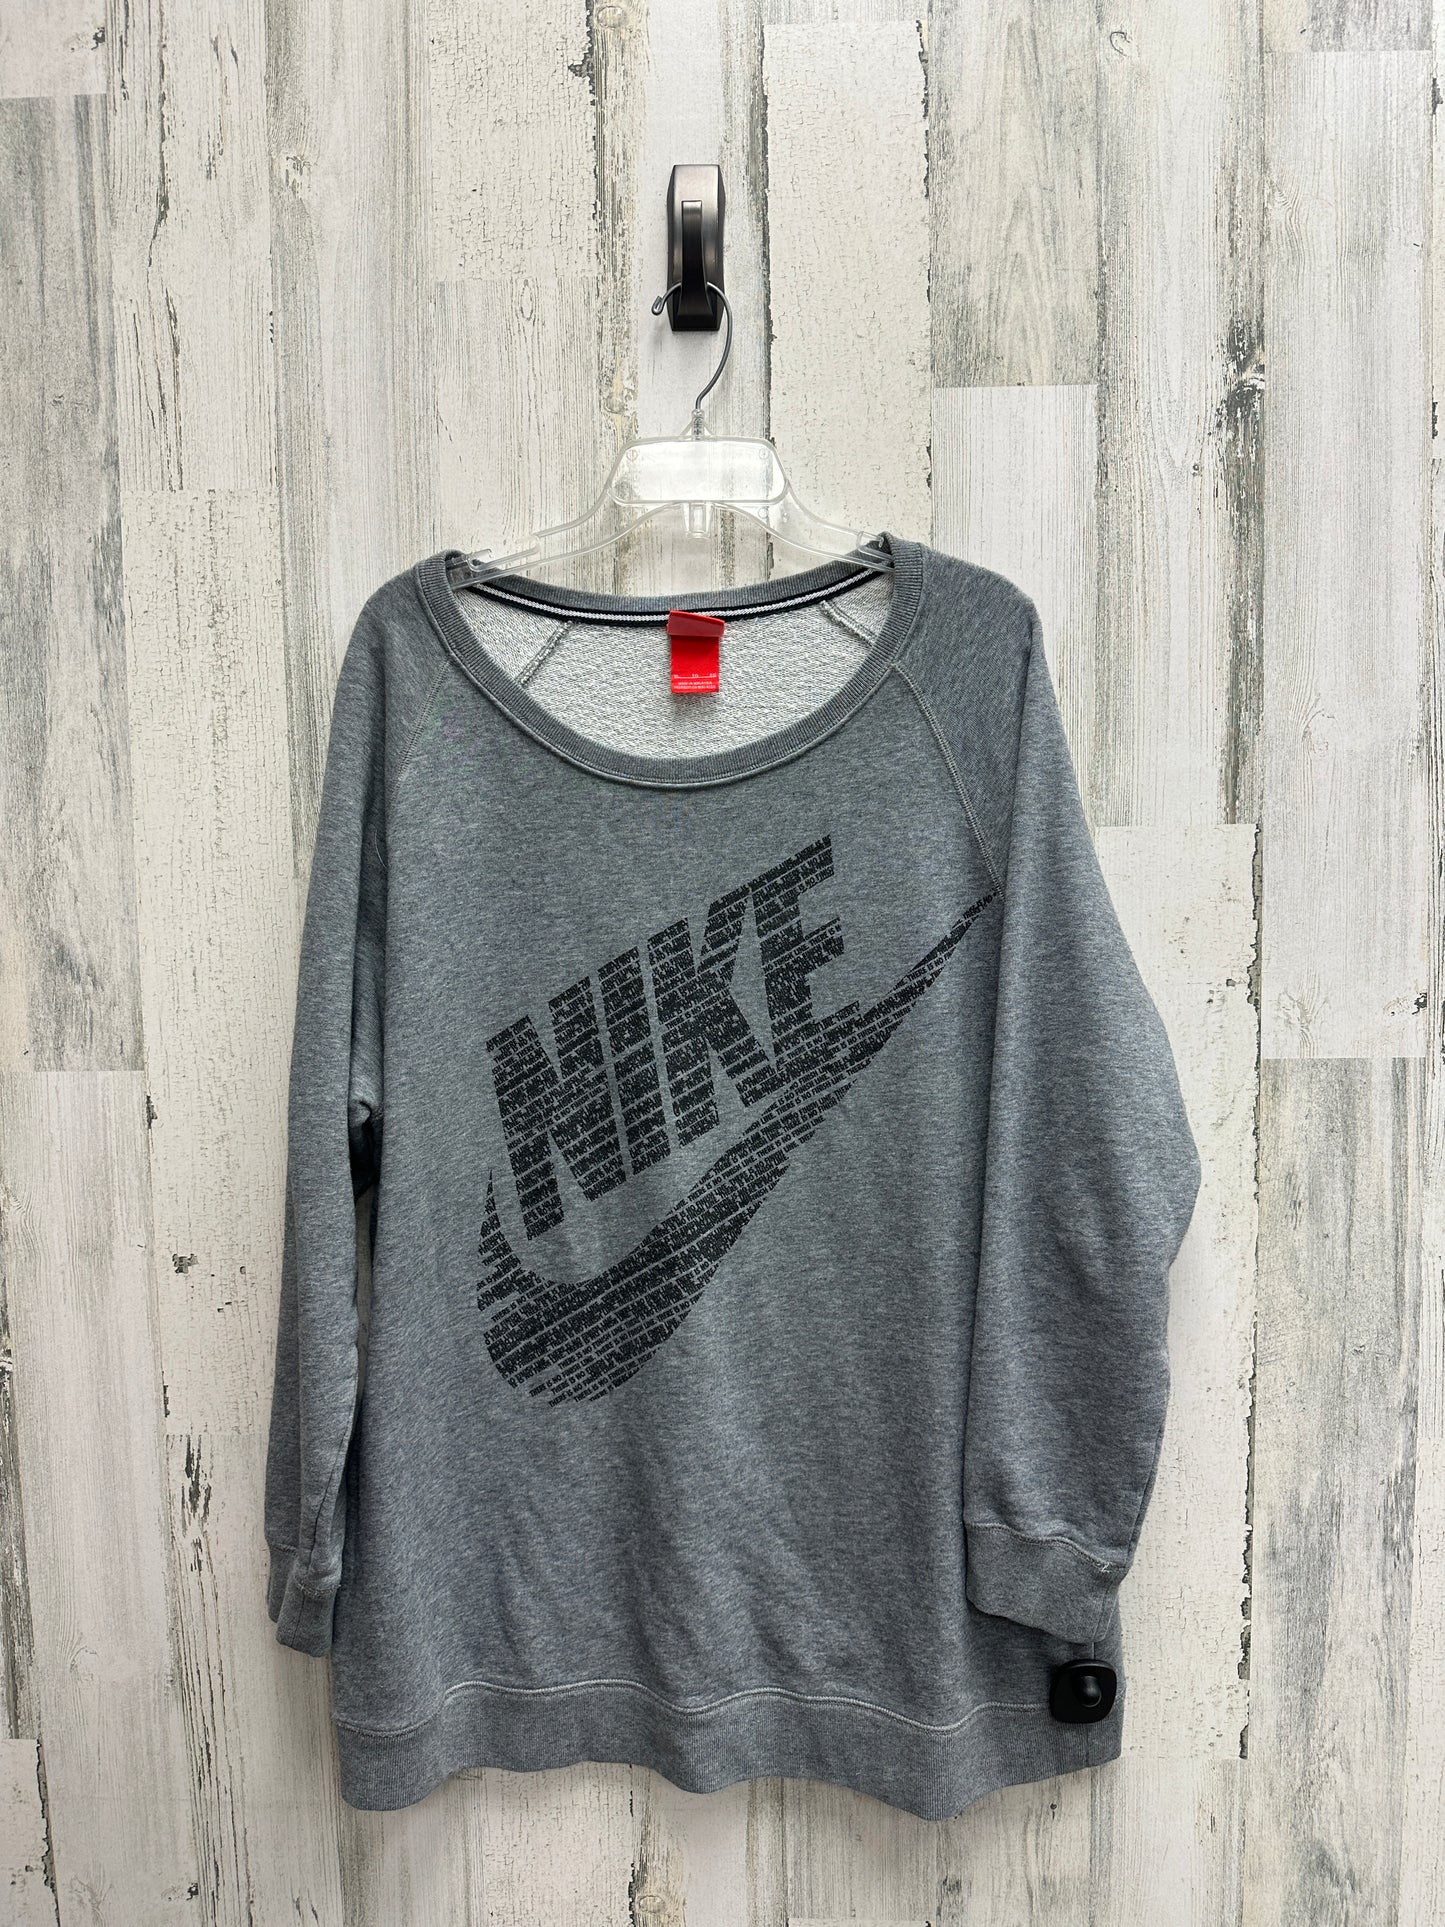 Sweatshirt Crewneck By Nike Apparel  Size: Xl